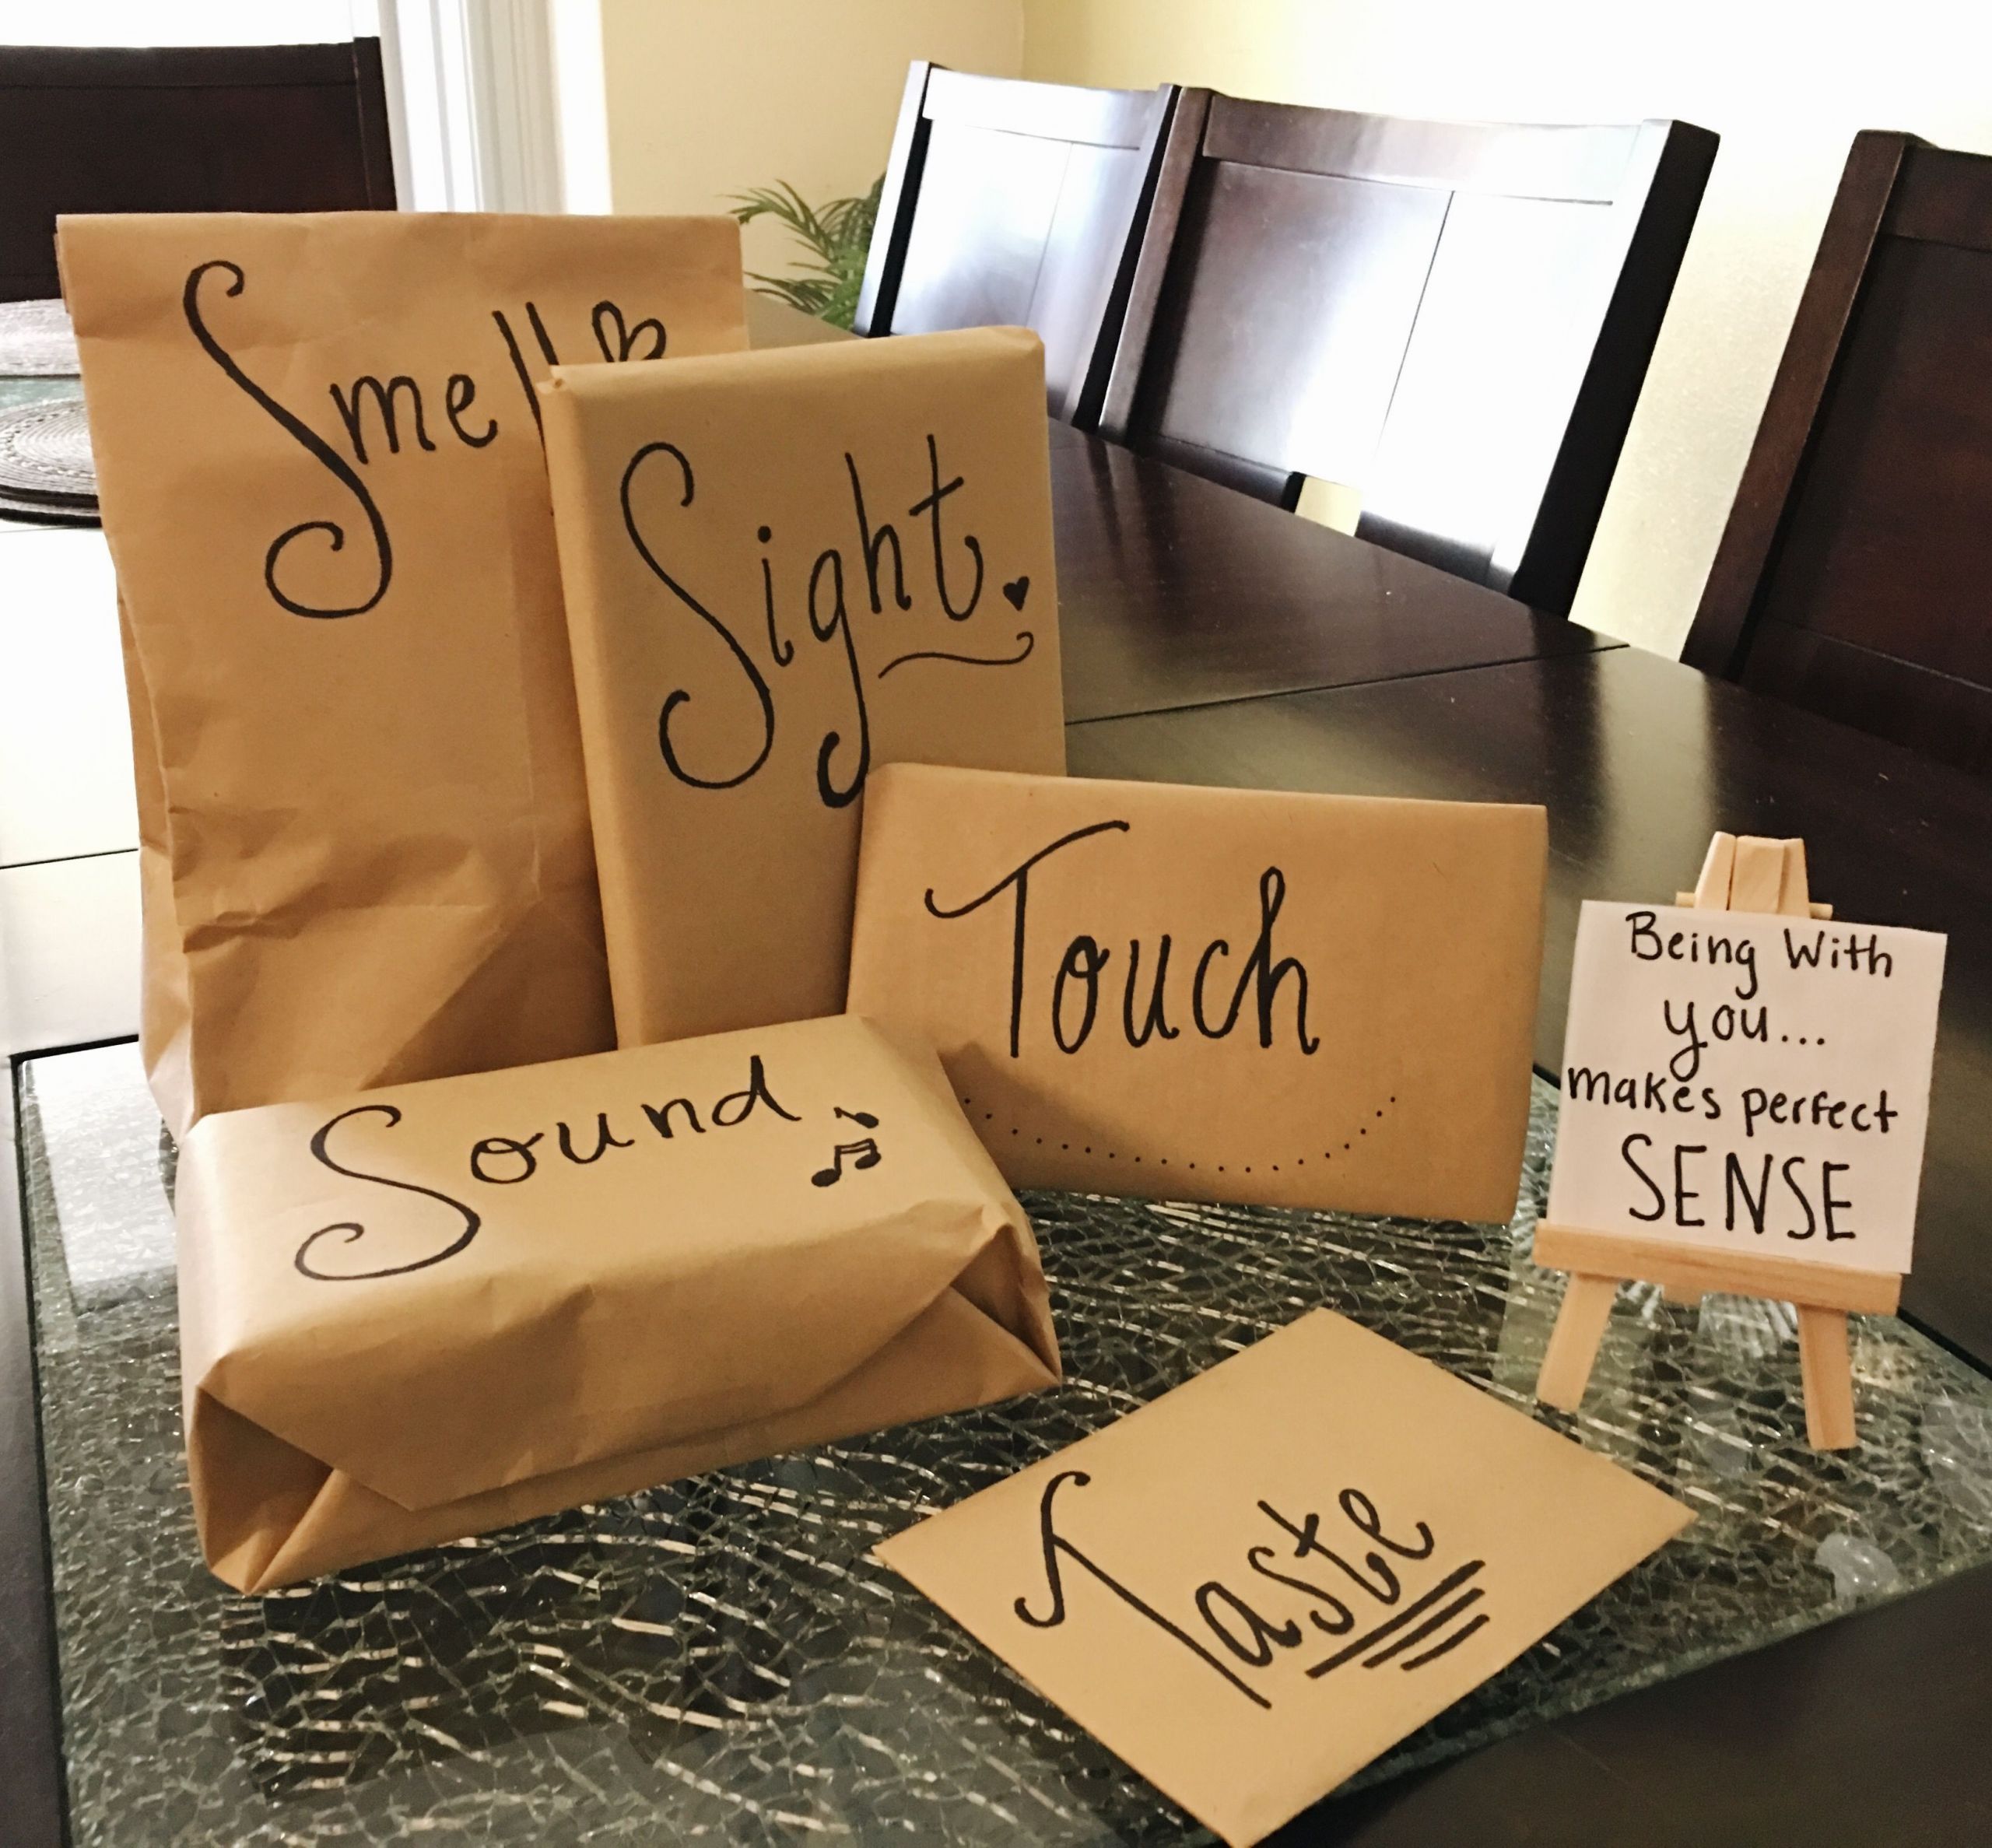 Creative Christmas Gift Ideas For Boyfriend
 Cute ideas for your boyfriend